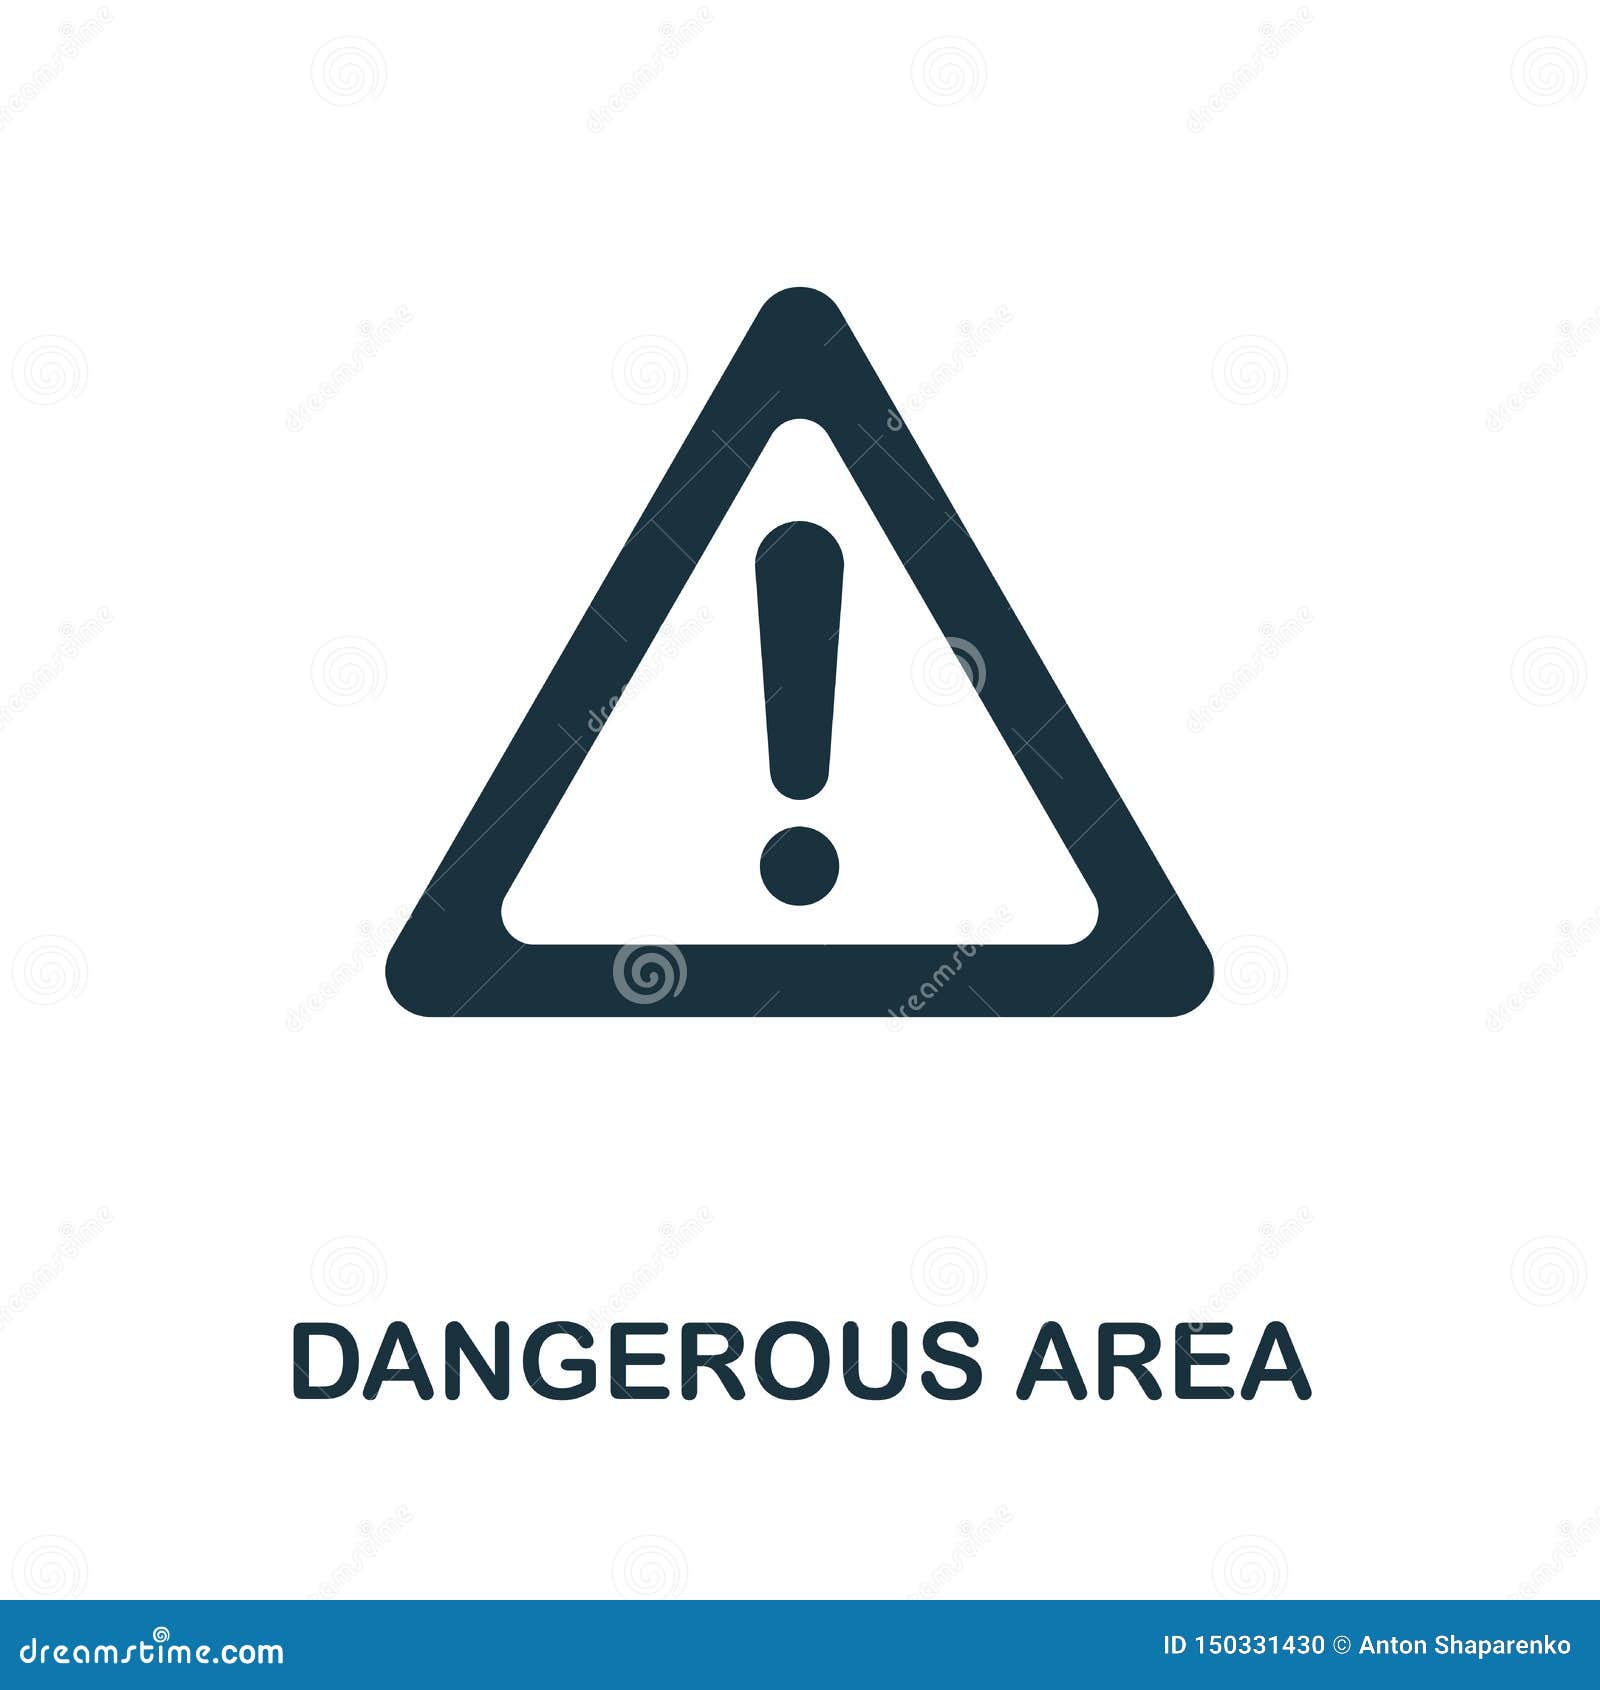 Dangerous area